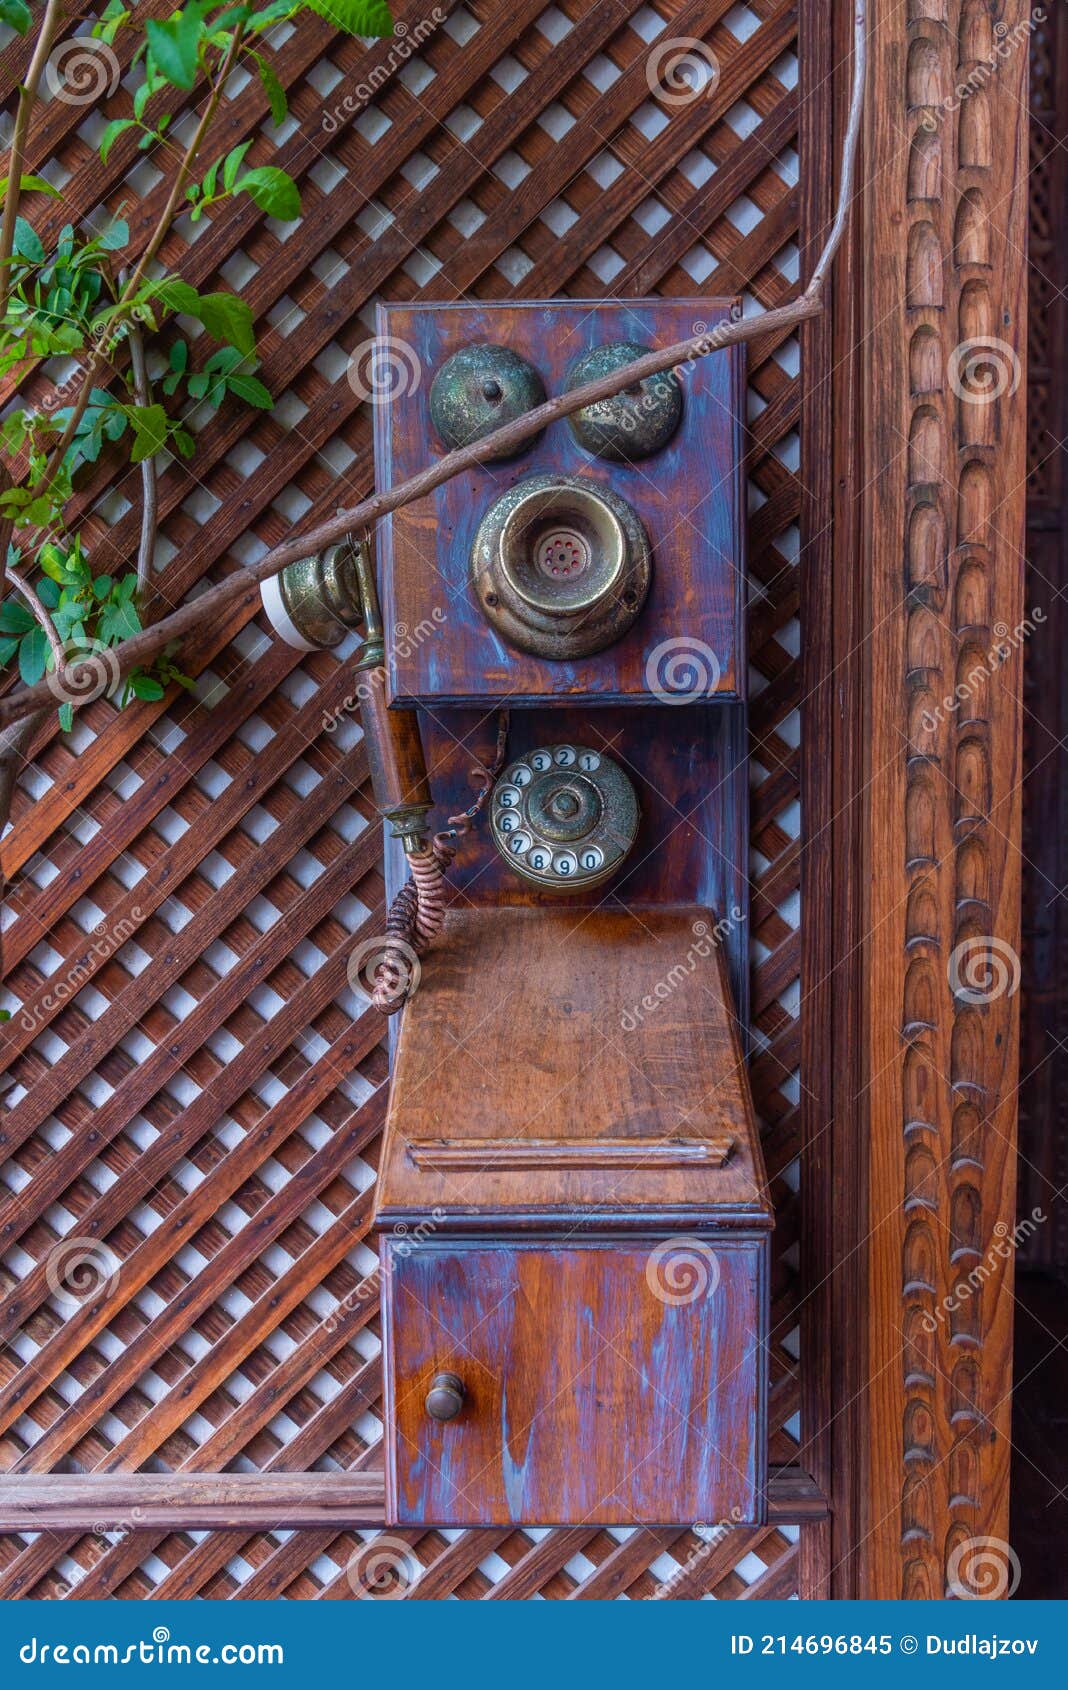 old phone at casa de los balcones in the old town at la orotava, tenerife, canary islands, spain